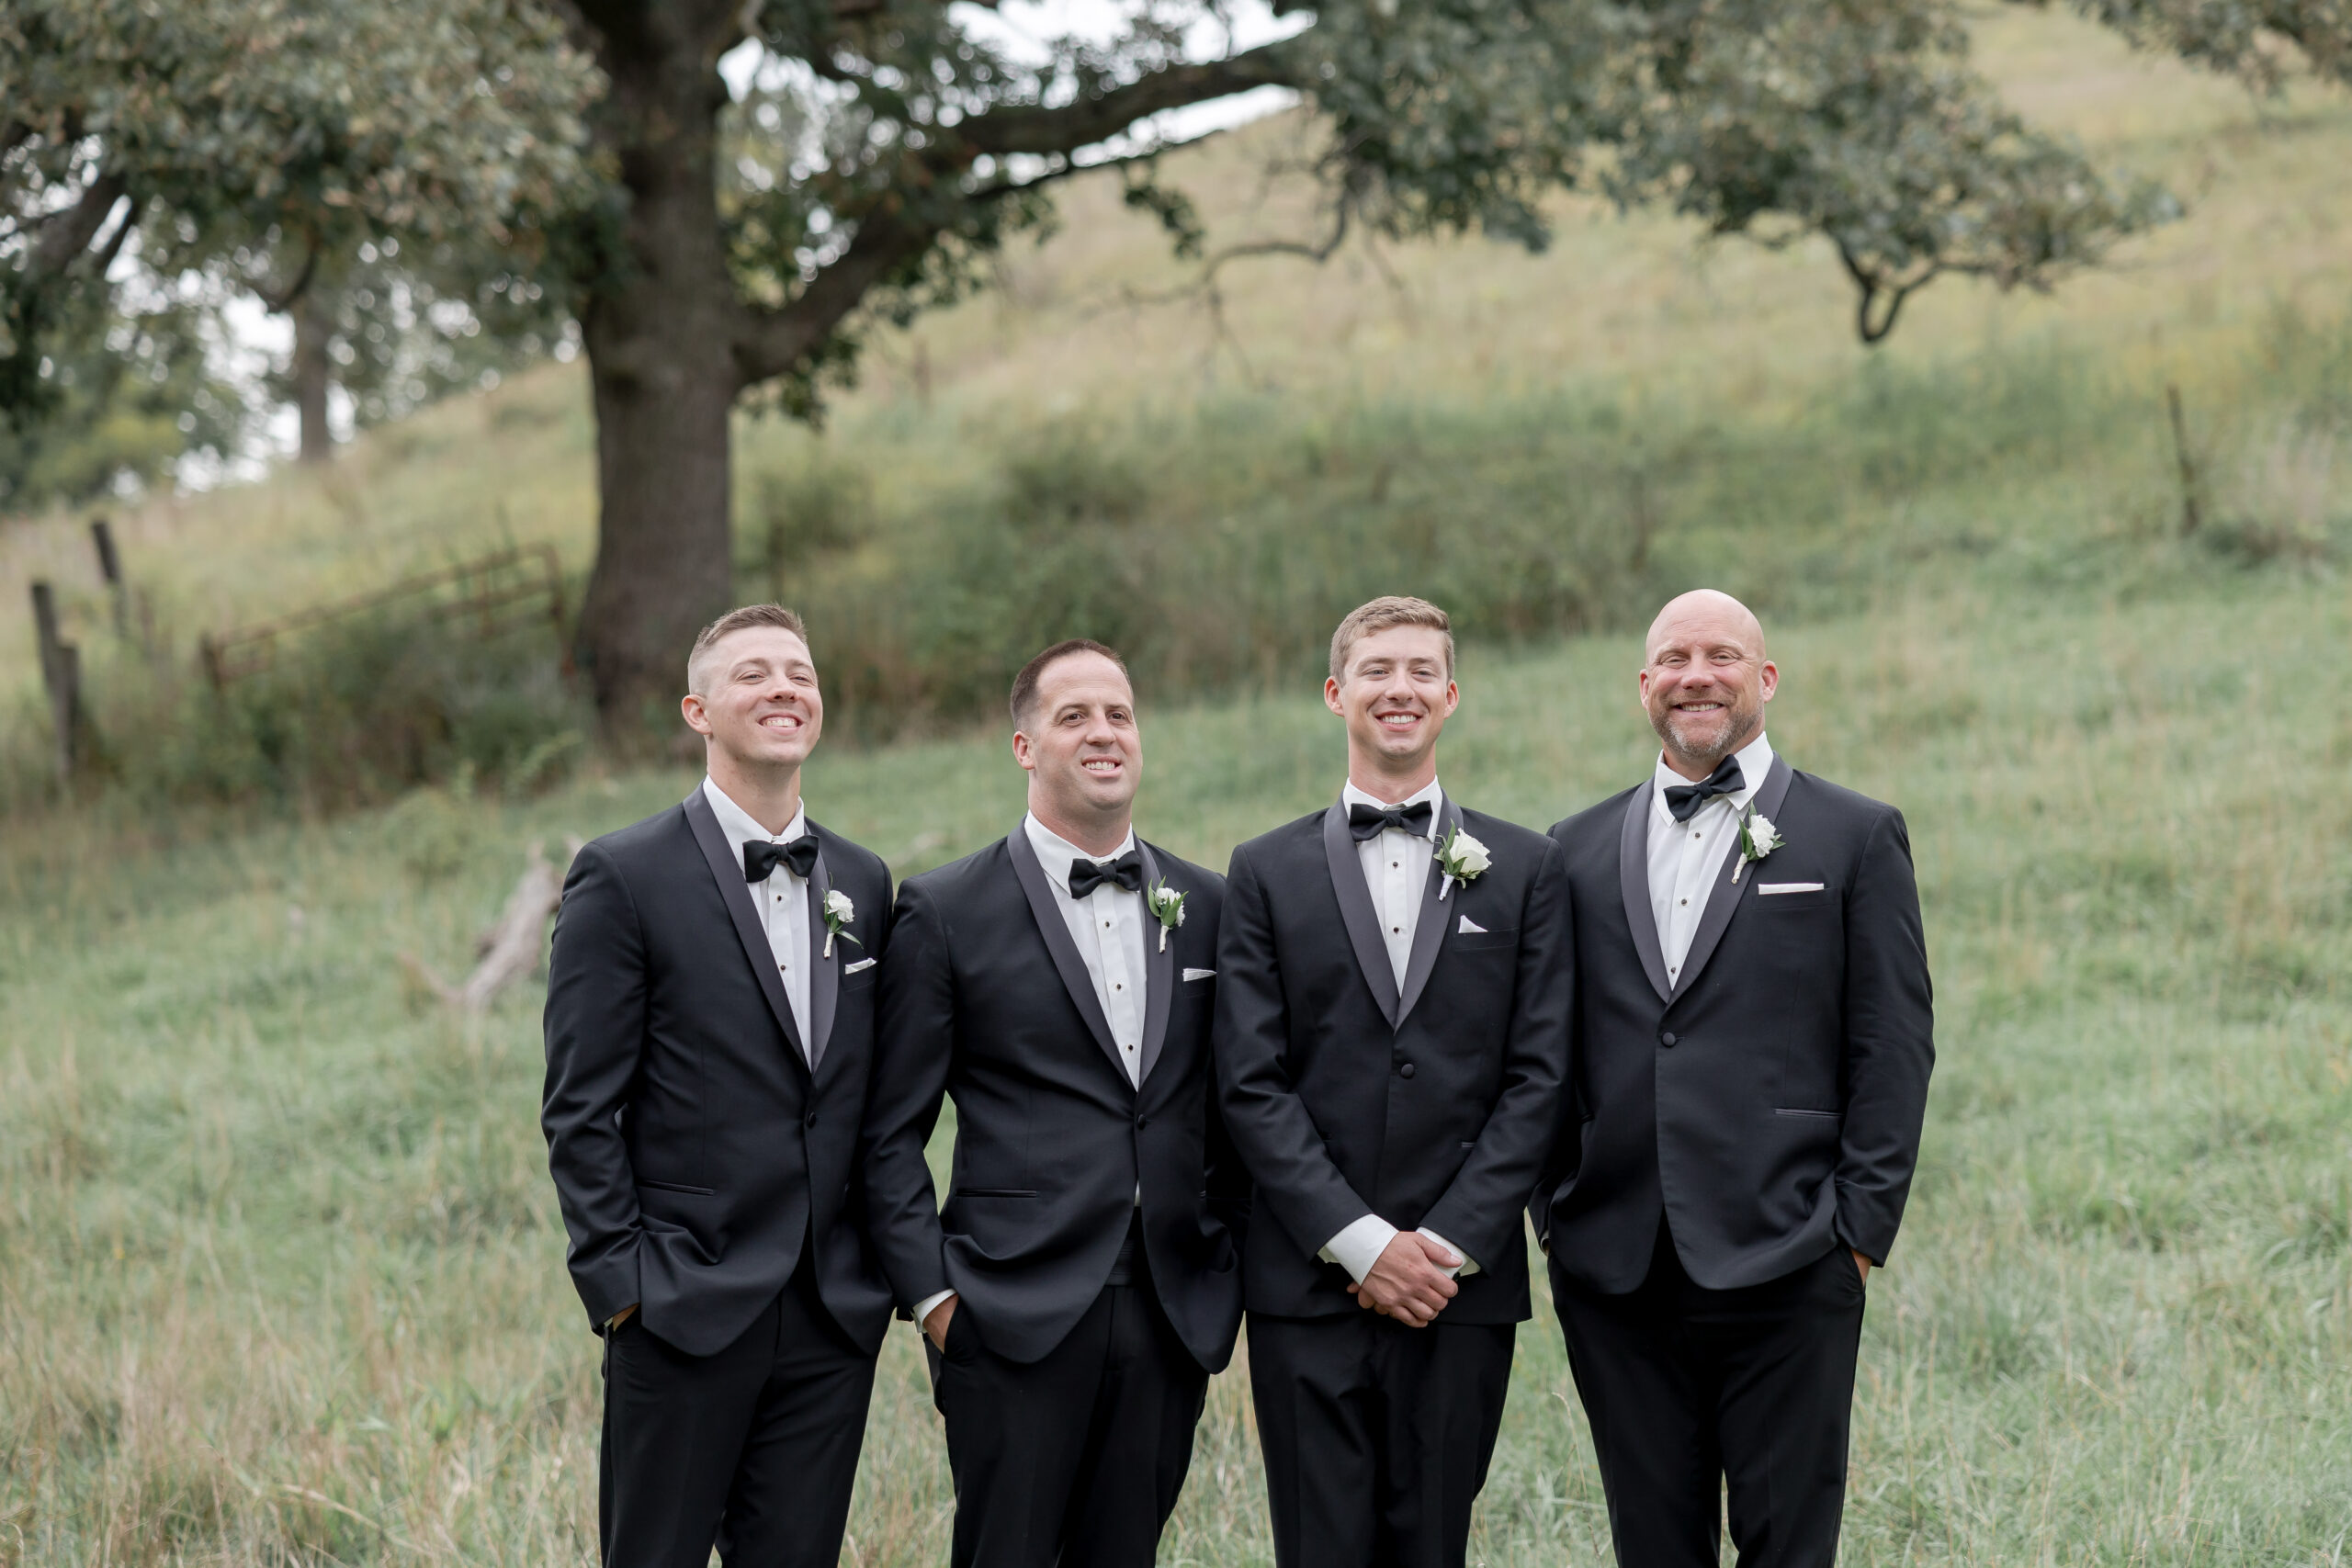 mississippi-river-wedding-photos-groomsmen